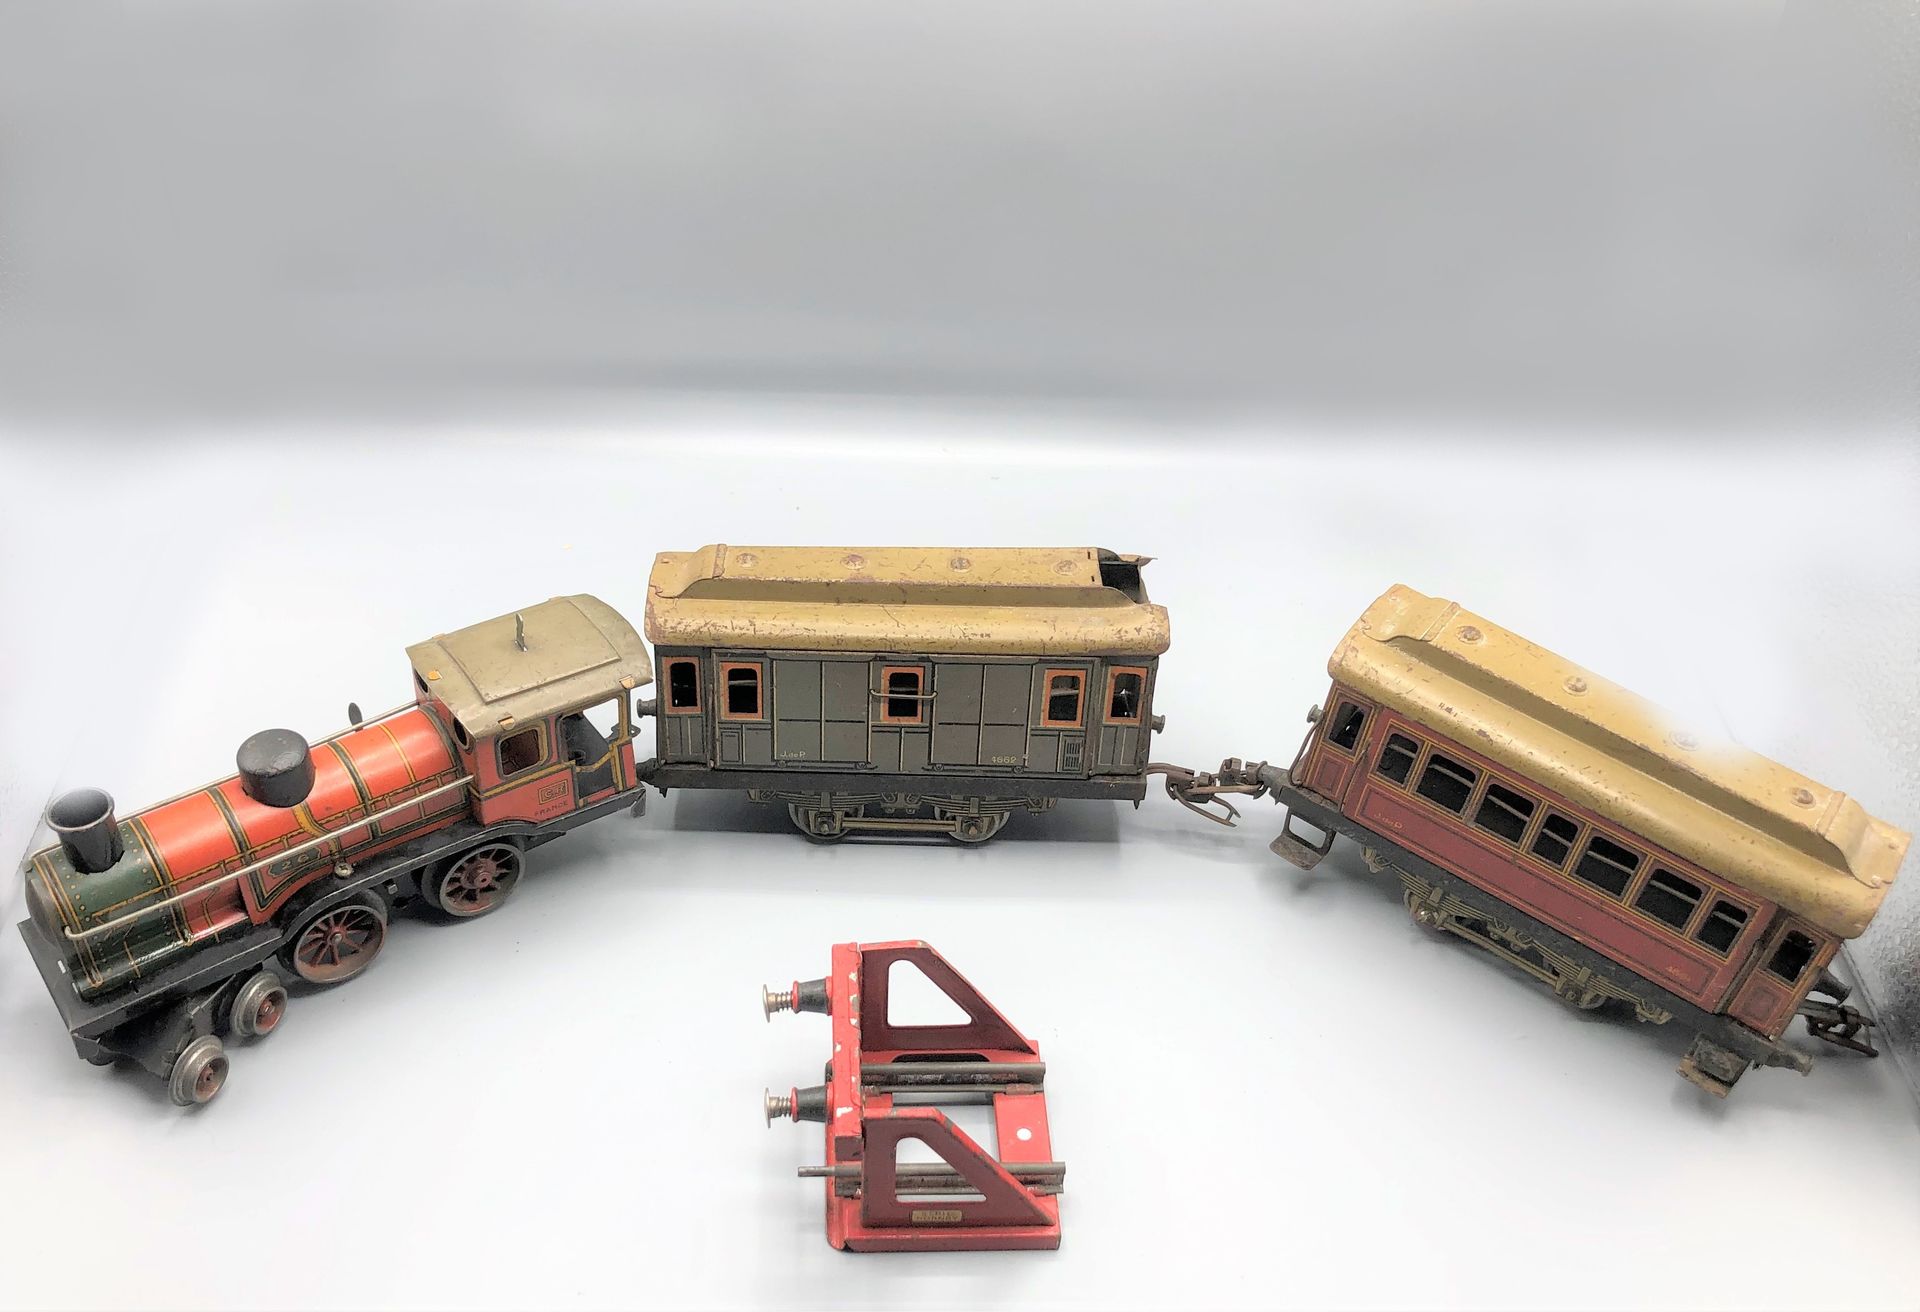 Null JEP和杂项 -0-

220红色机车，不含标车、客车、行李车、保险杠

1935 - 1950



使用条件

更多信息请联系该研究。